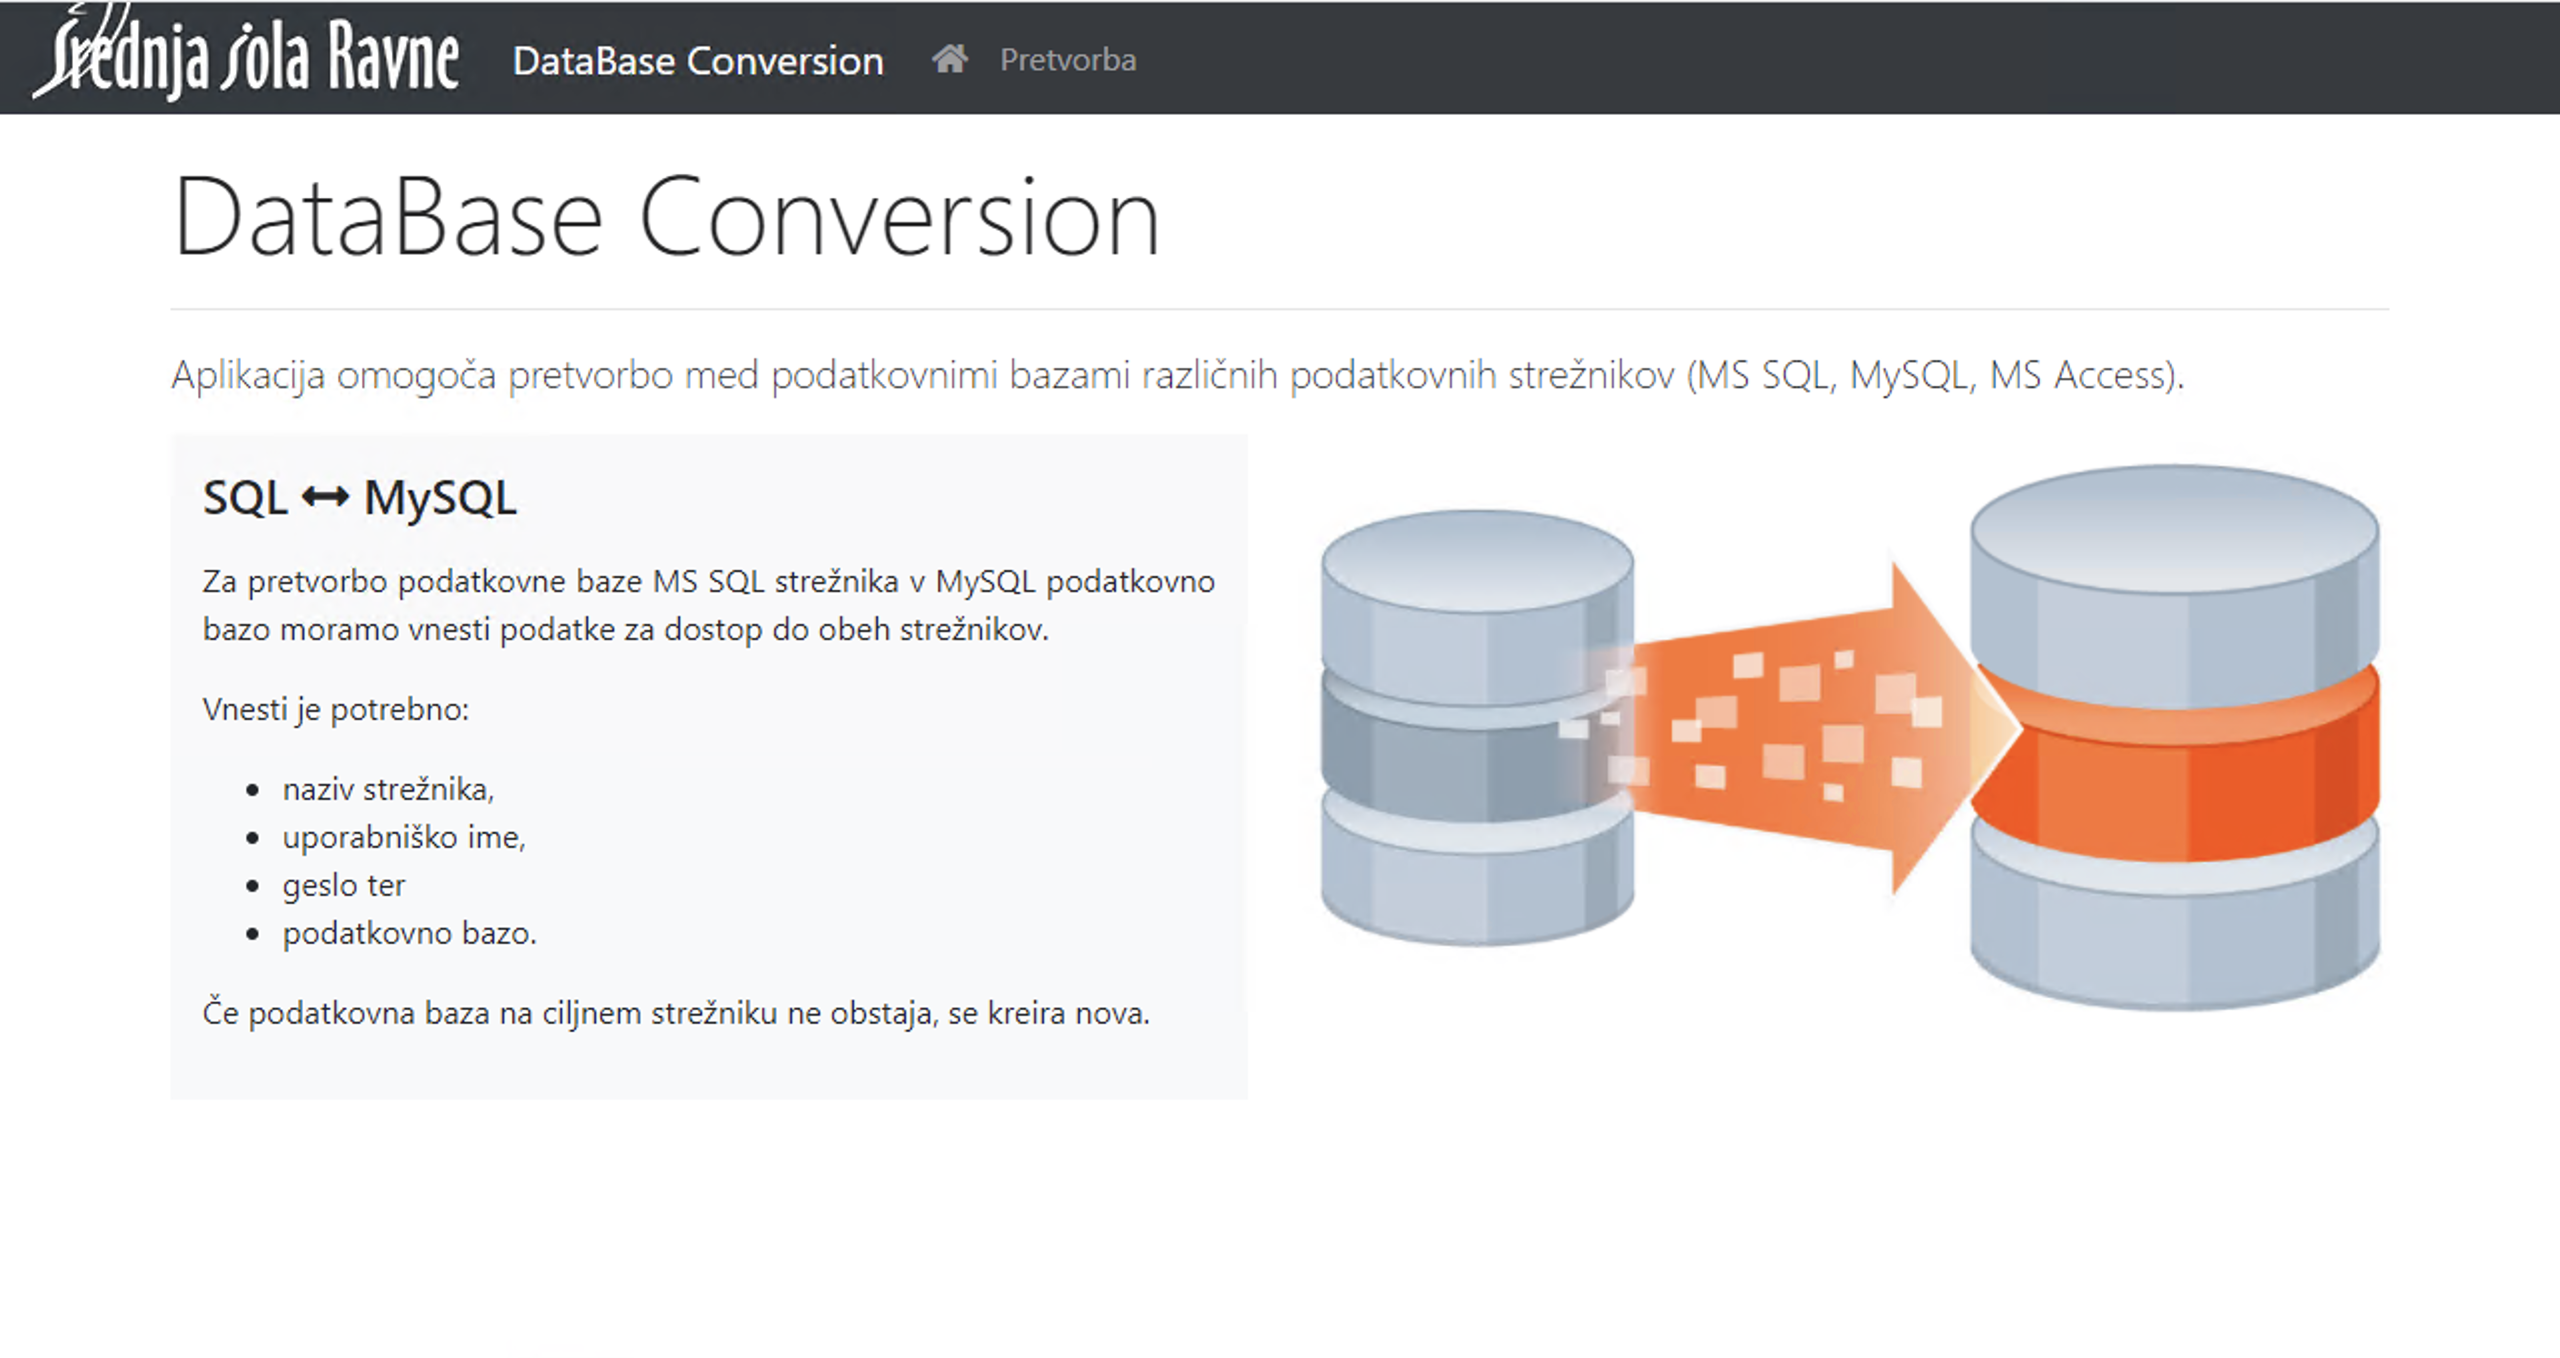 Database conversion